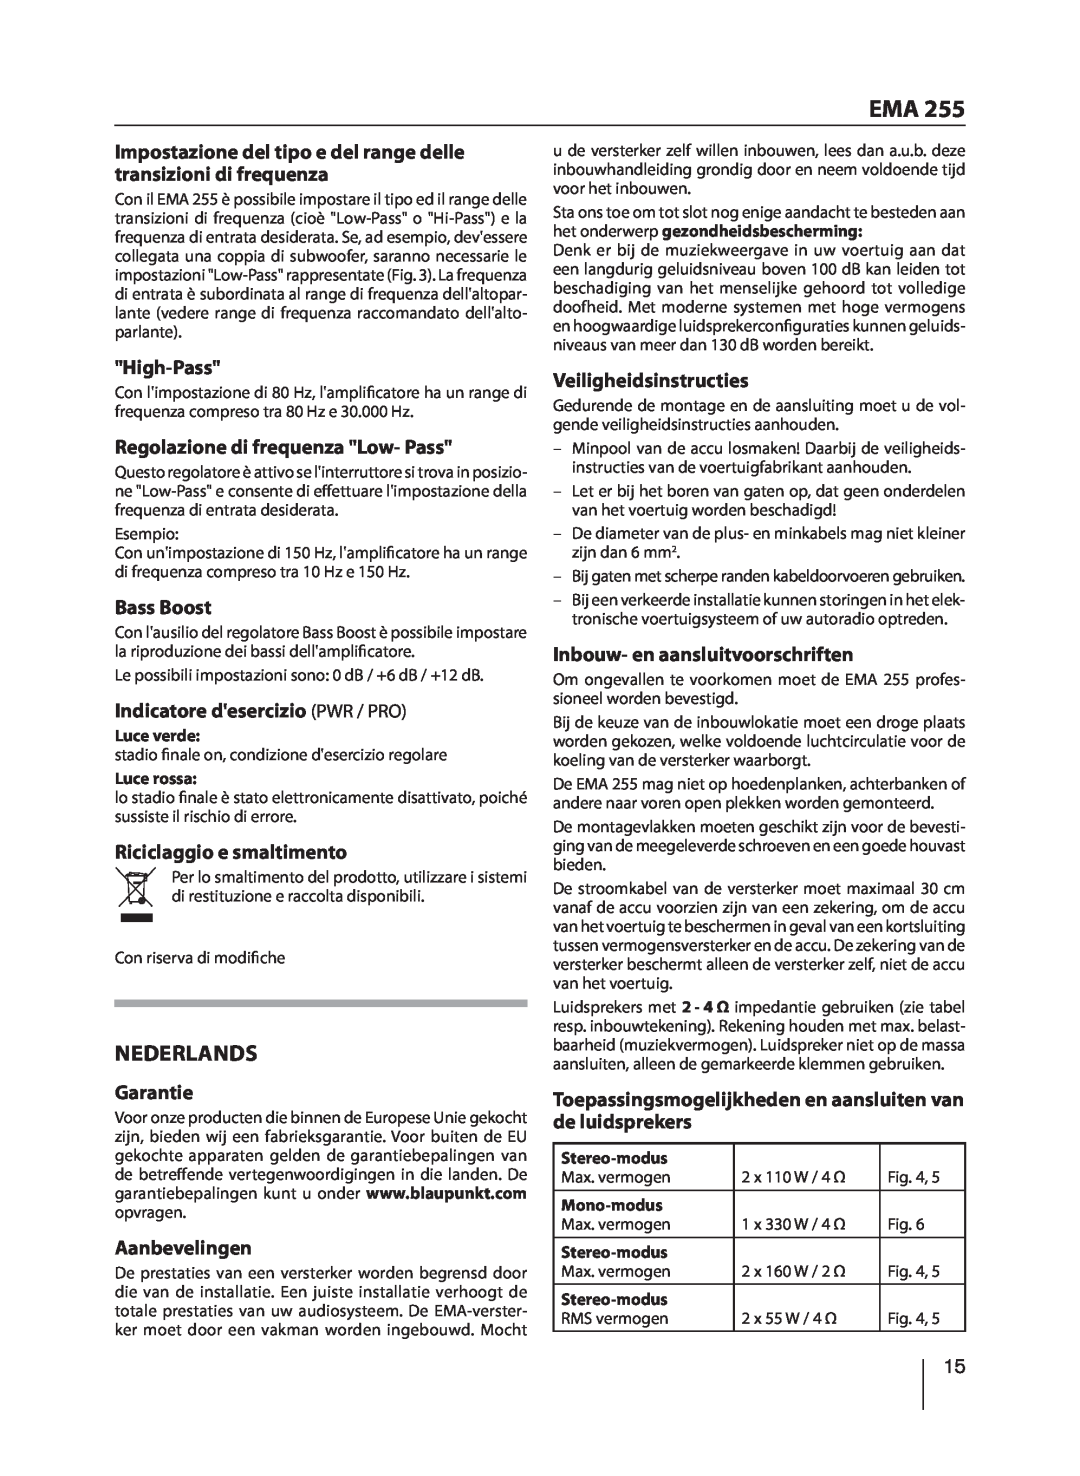 Blaupunkt EMA 255 manual Nederlands 